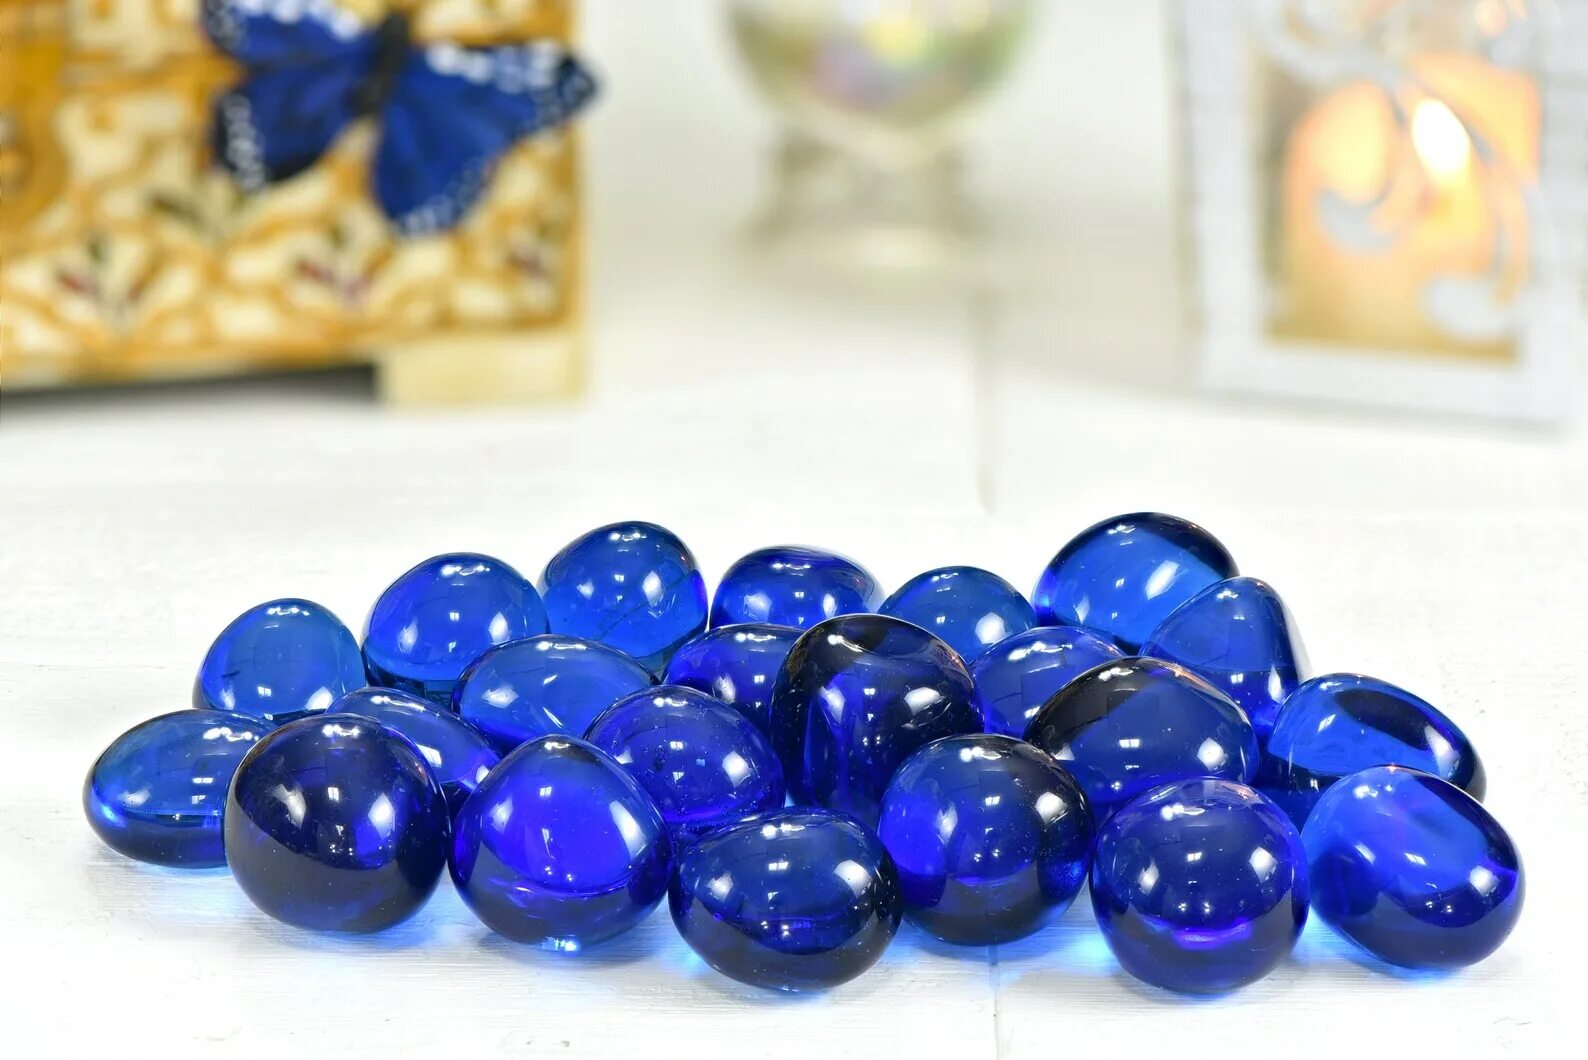 Blue Obsidian. Голубой обсидиан камень. Индиго камень. Обсидиан синего цвета. Синий обсидиан